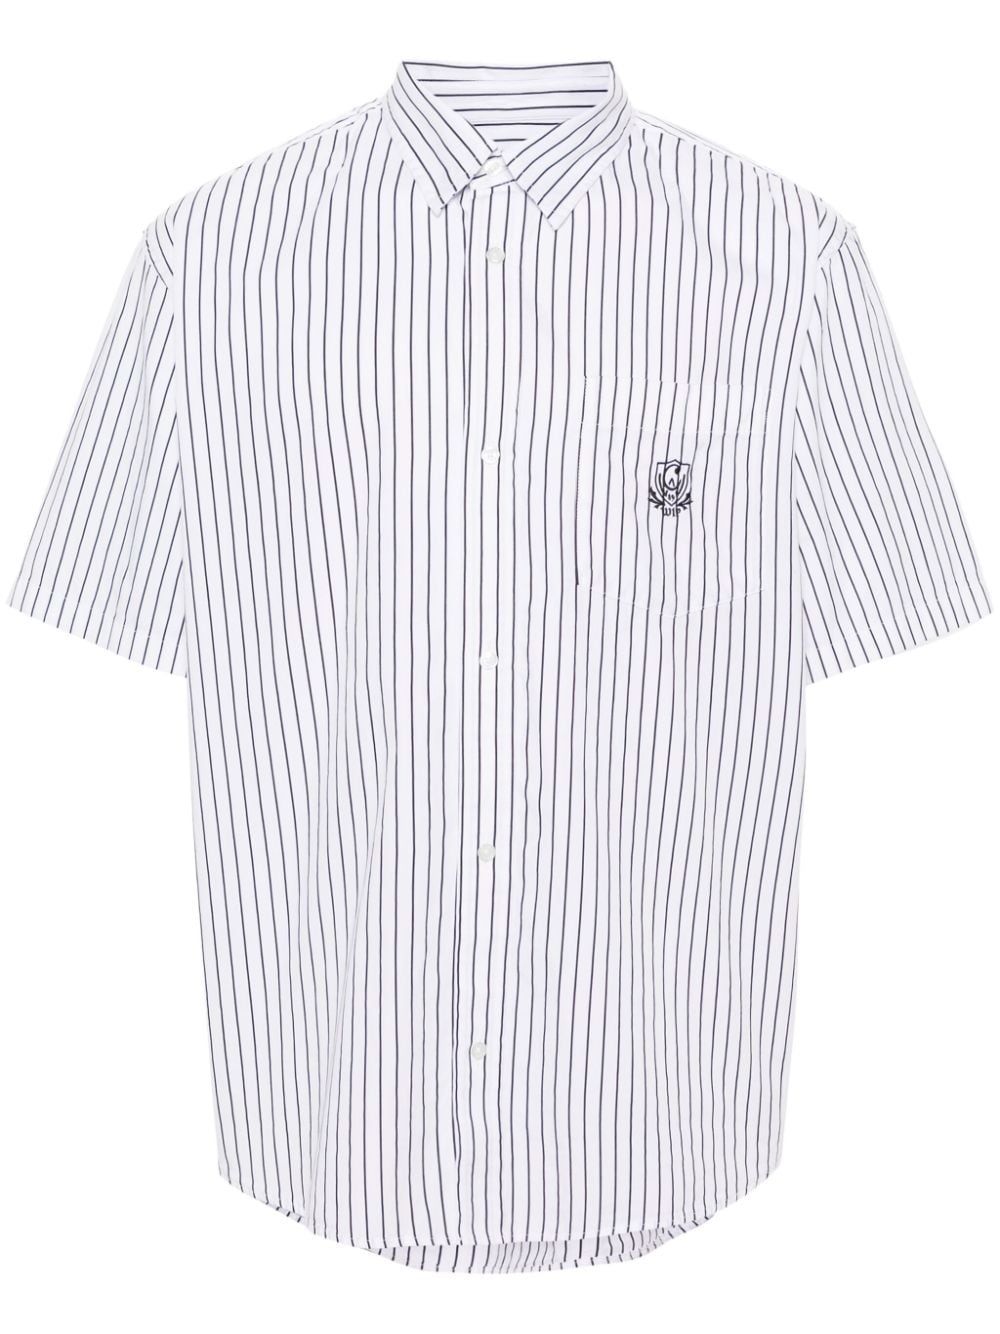 Linus cotton shirt - 1